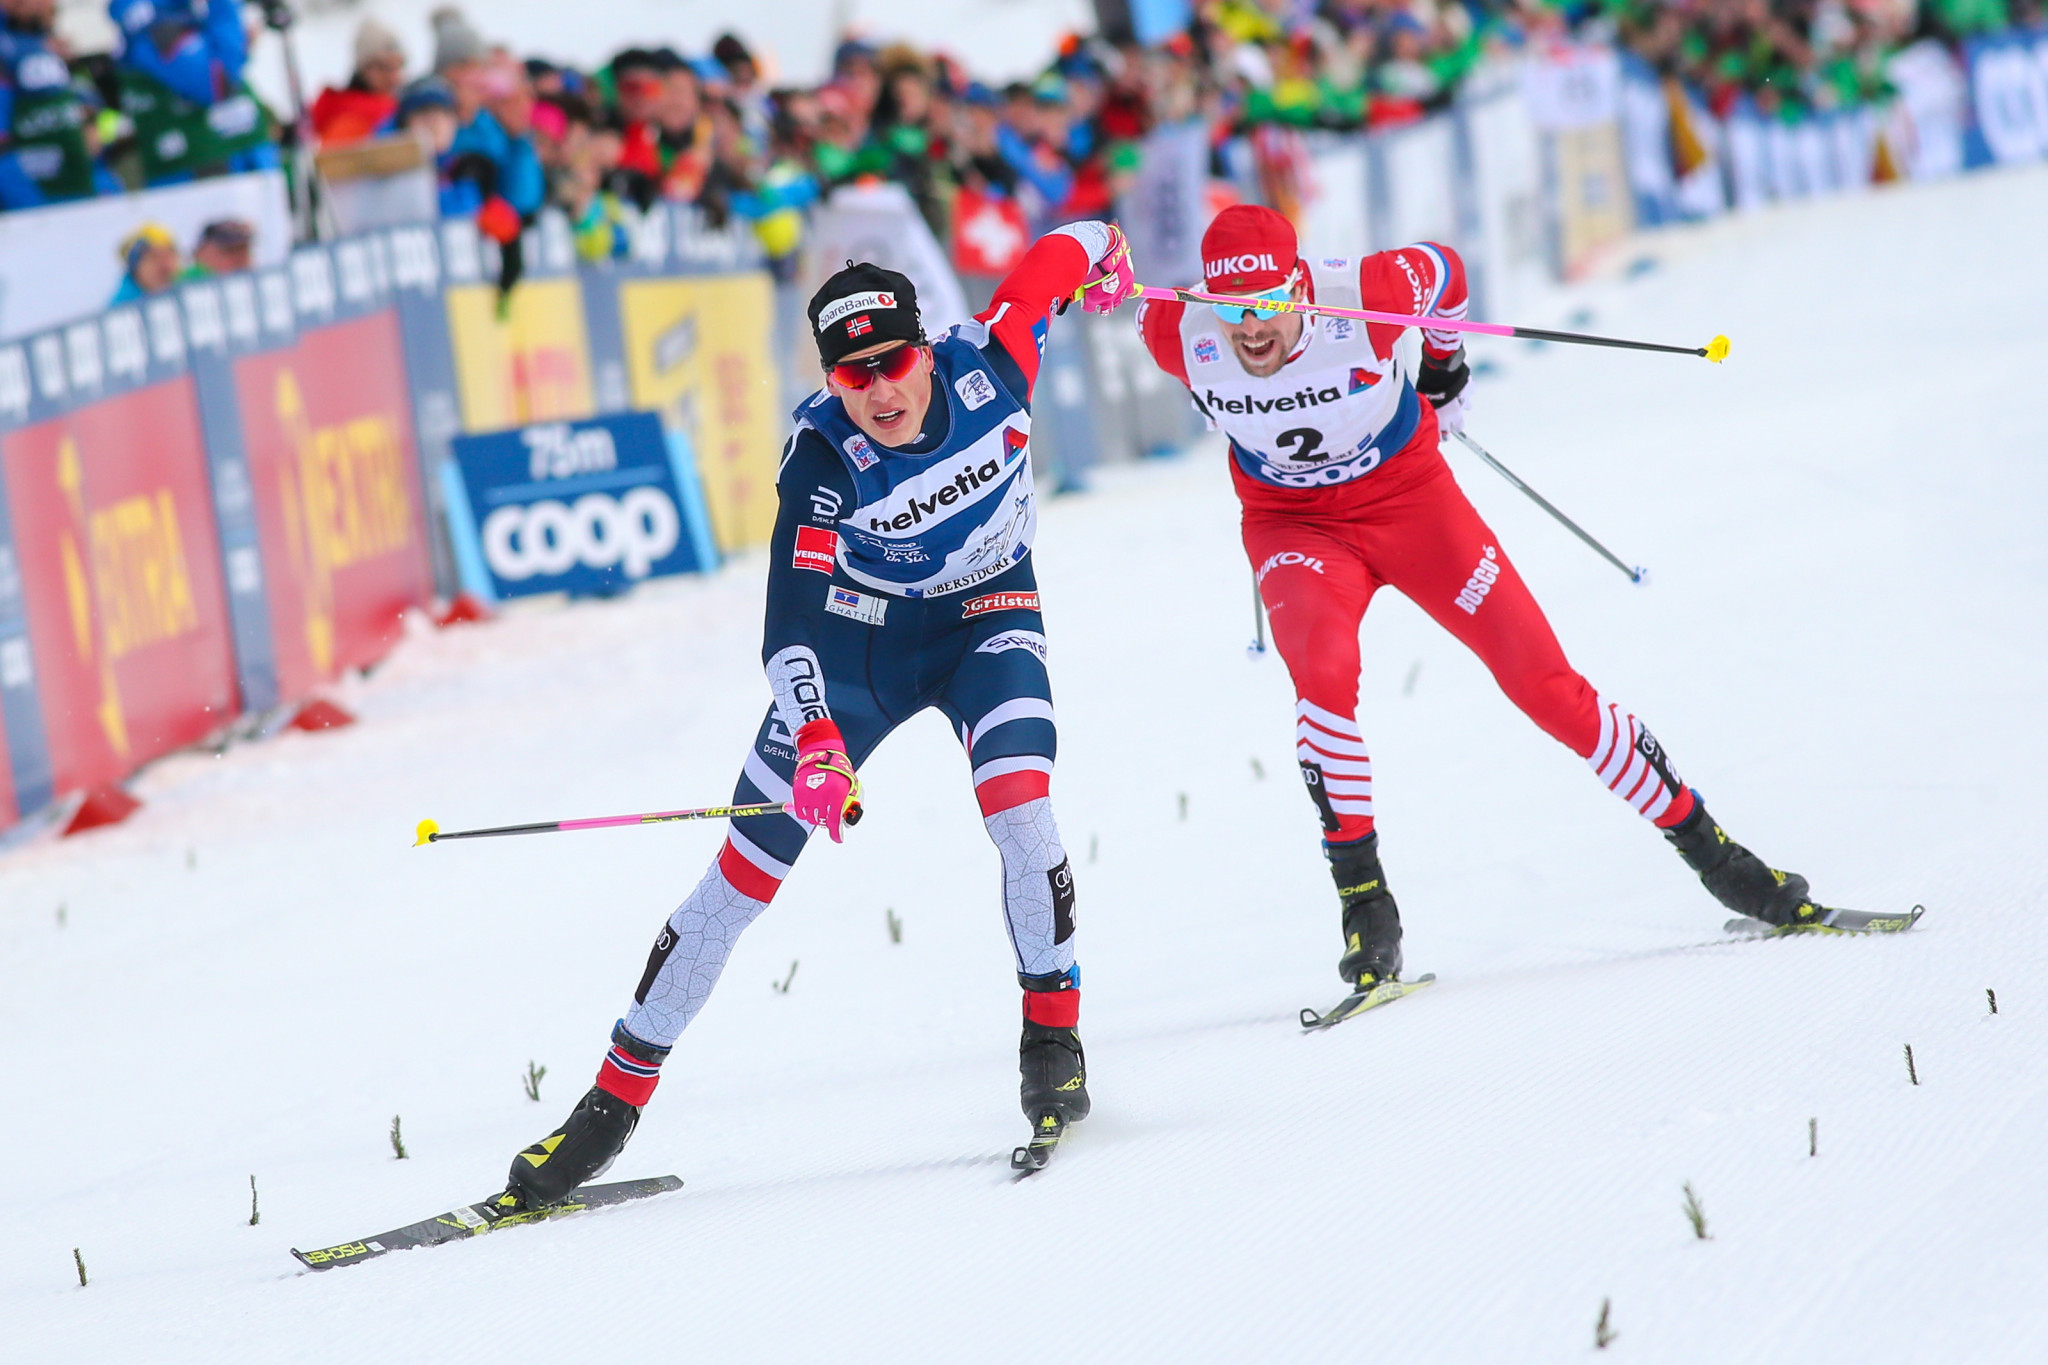 Johannes Høsflot Klaebo won the penultimate stage of the 2019 Tour de Ski to gain an 80 second lead ©Getty Images